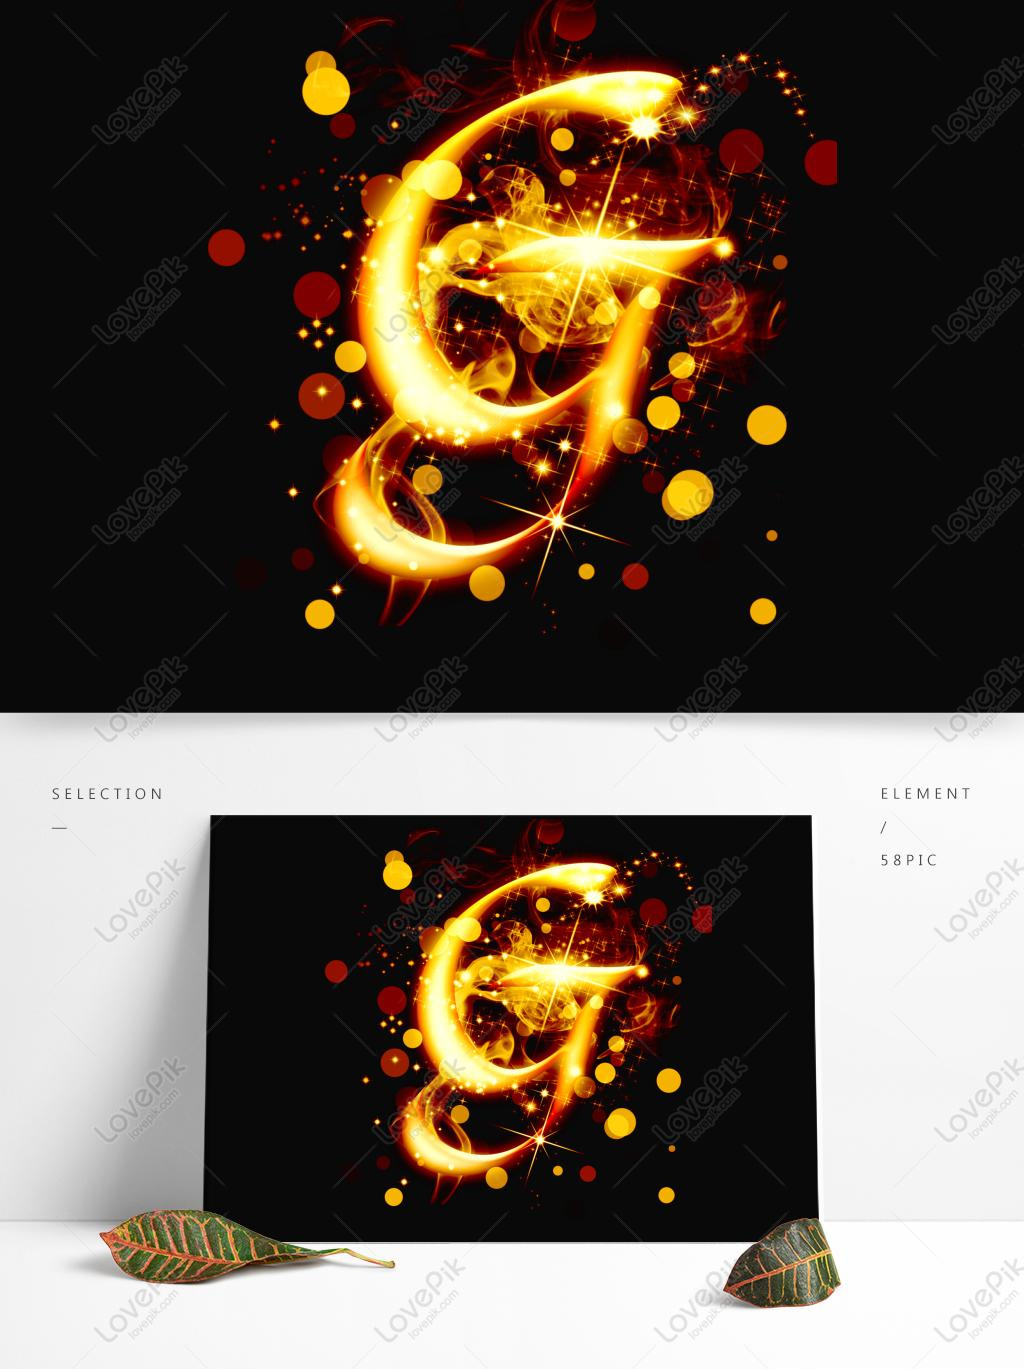 Golden Boutique Light Effect Letter G Can Be Commercial Elements PNG  Transparent Image PSD images free download_1369 × 1024 px - Lovepik